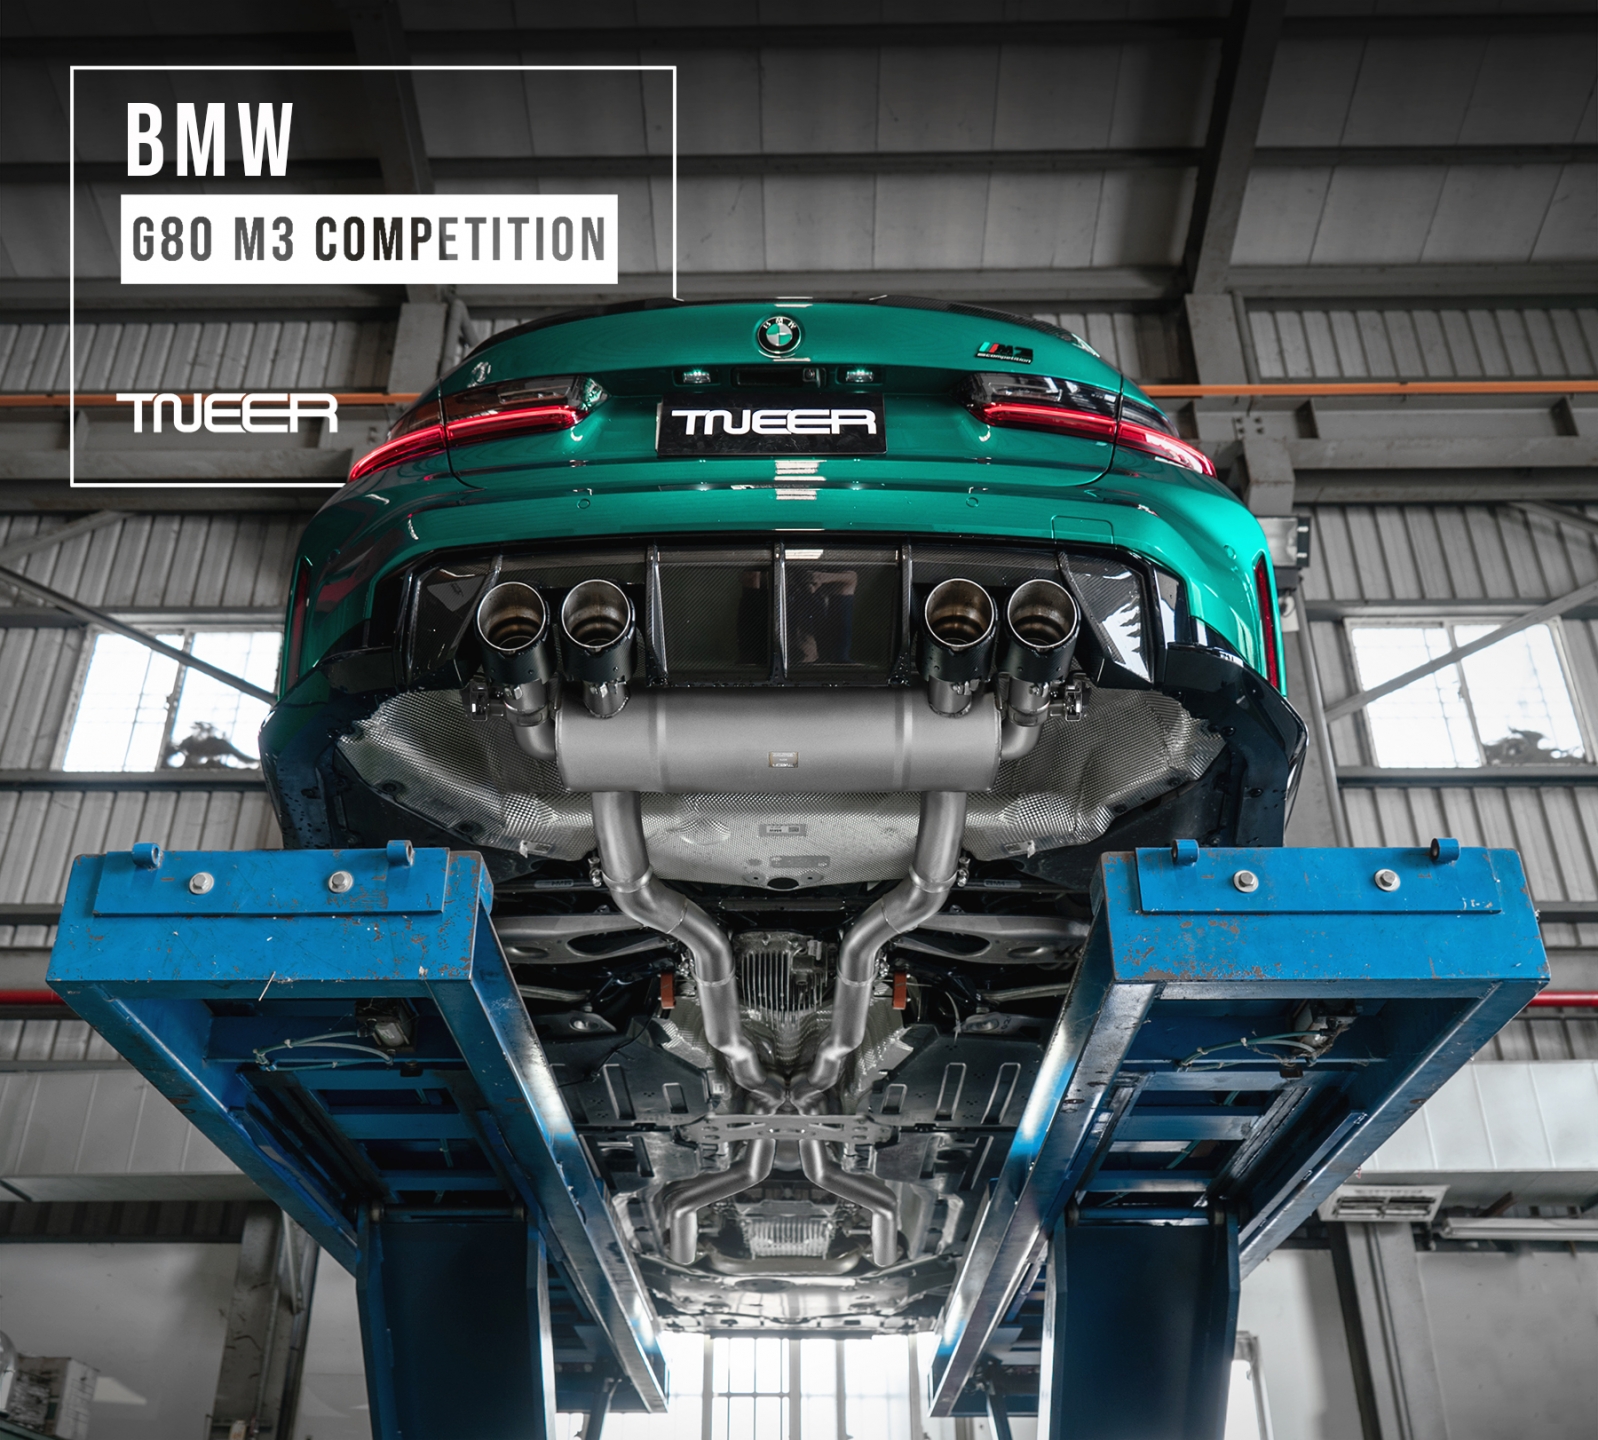 BMW F80 M3 TNEER Downpipes